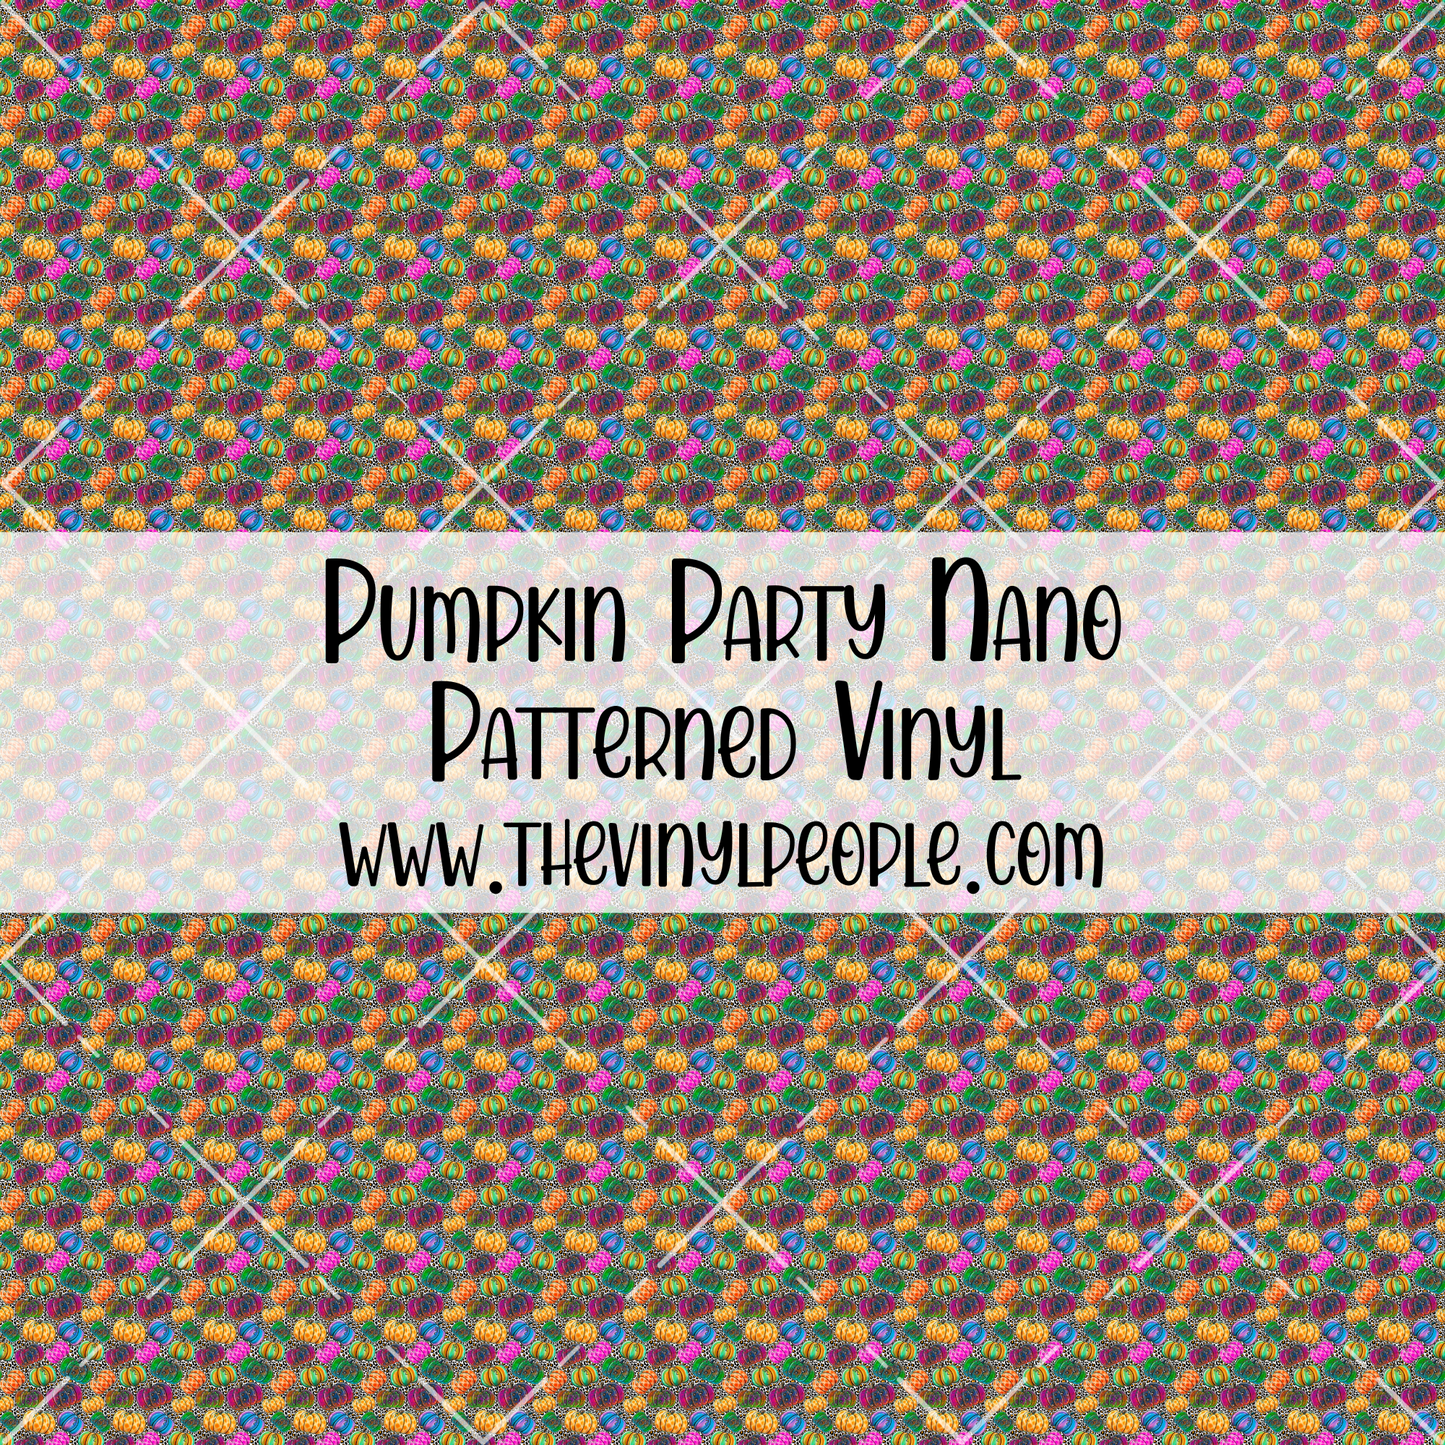 Pumpkin Party Patterned Vinyl